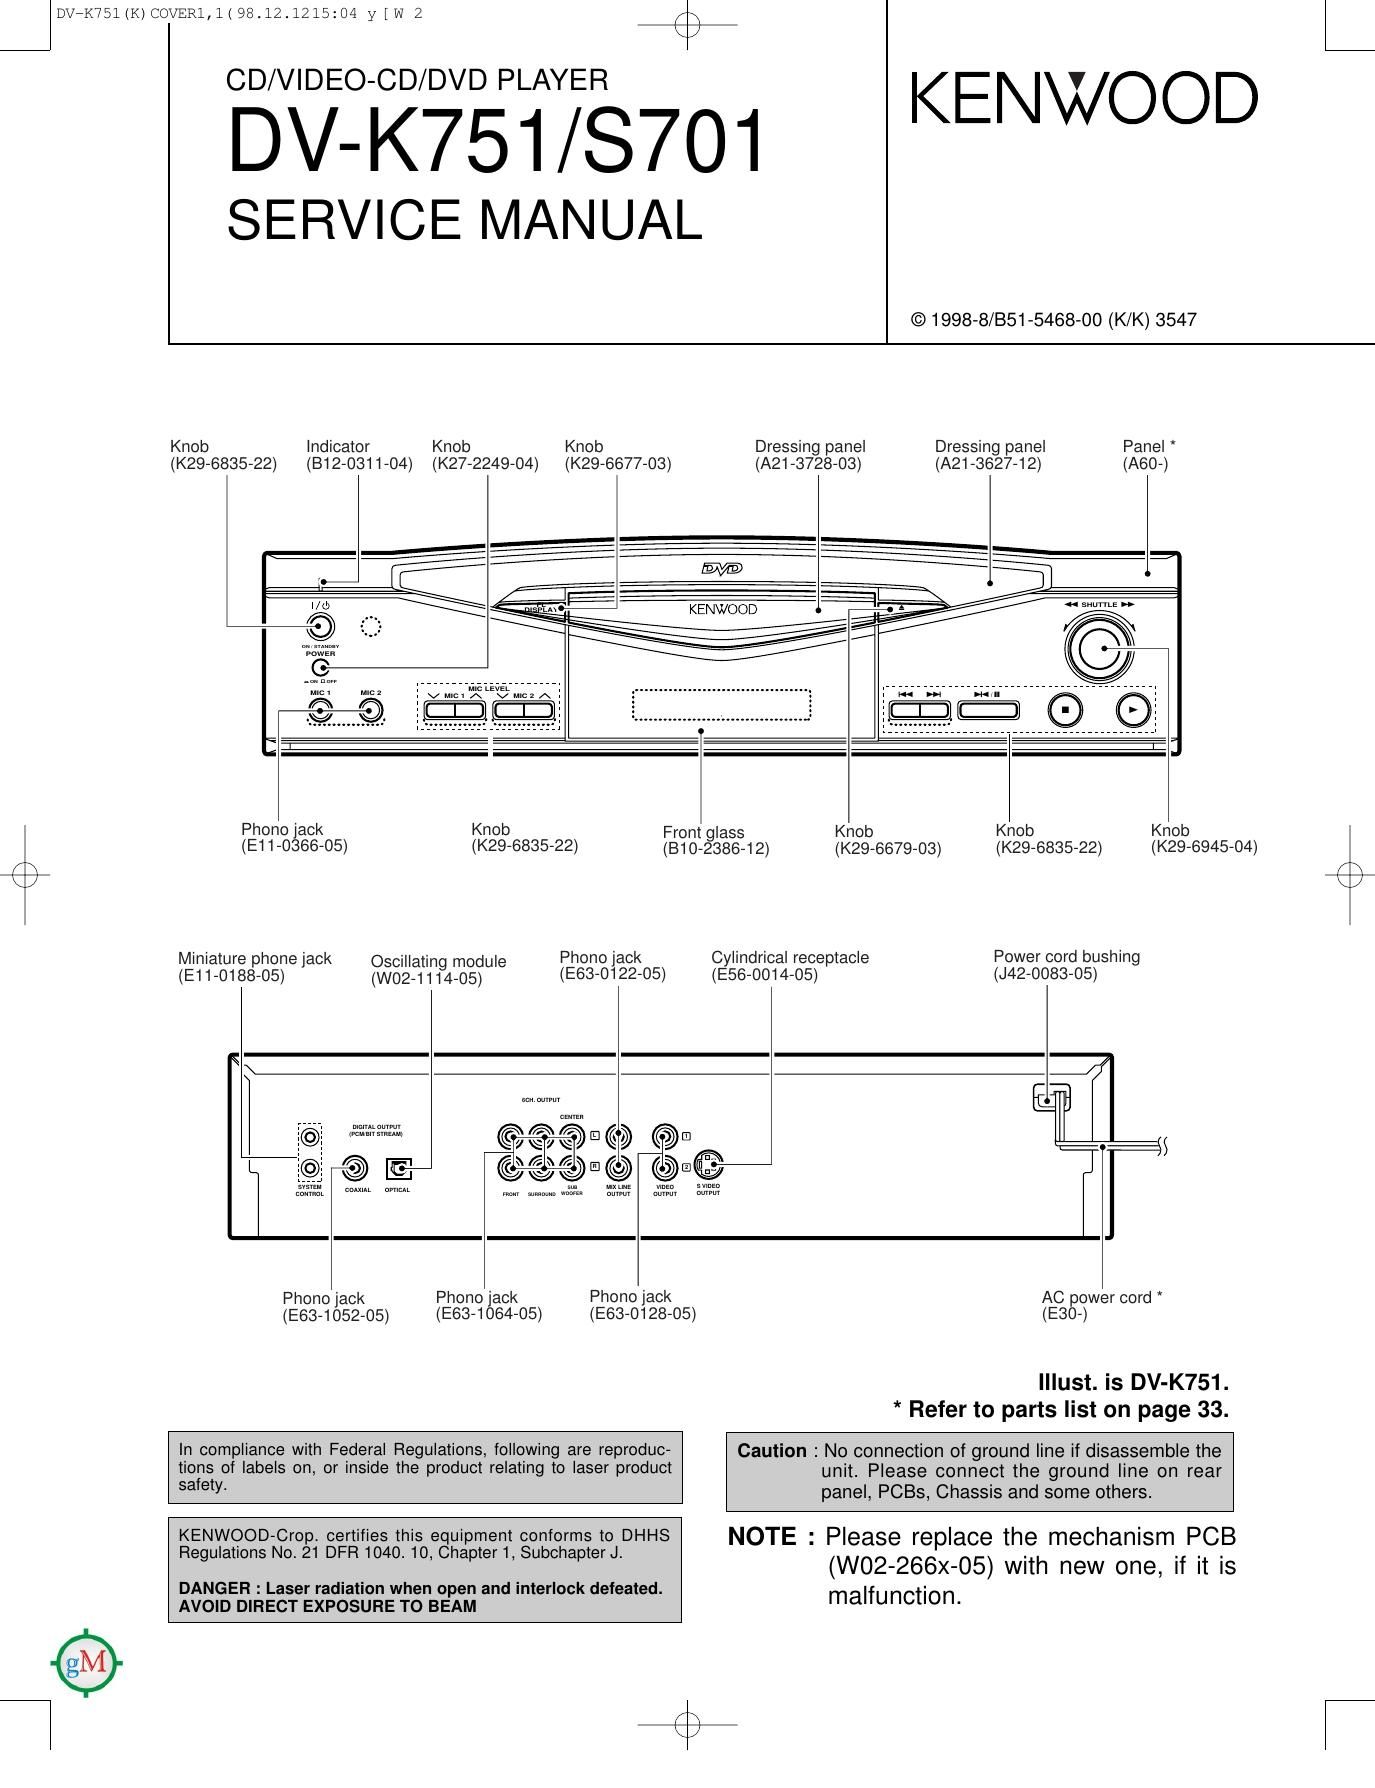 Kenwood DVS 701 Service Manual